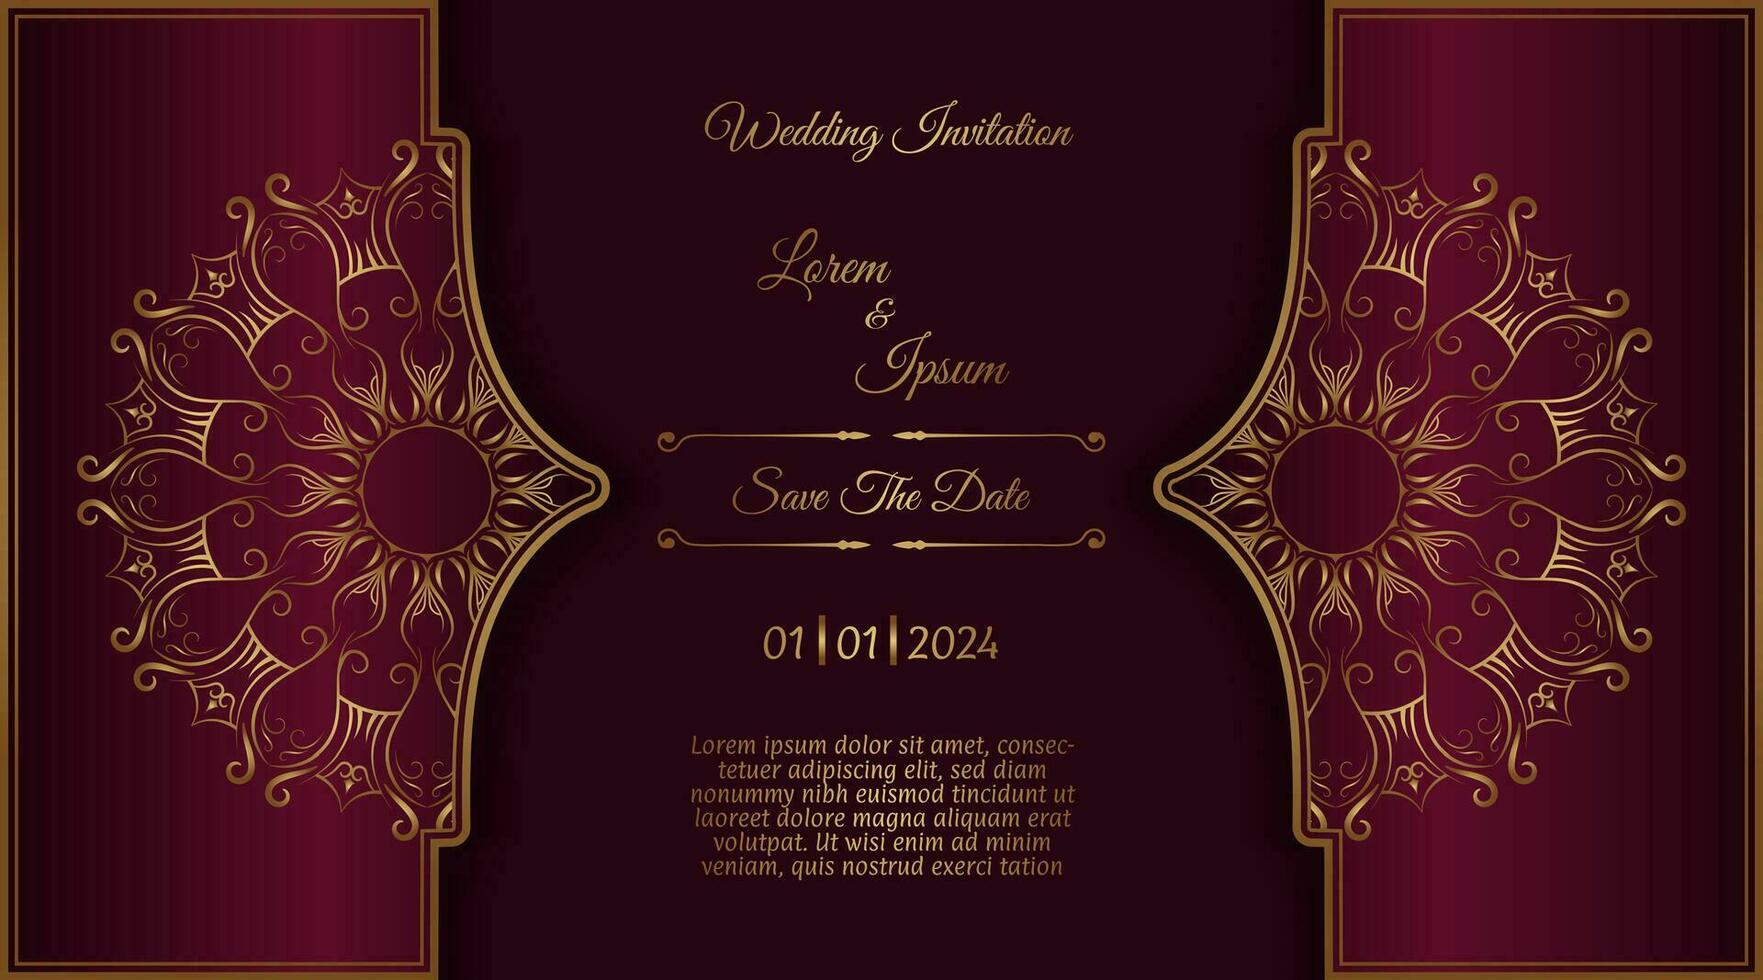 wijnoogst uitnodiging kaart, met mandala ornament vector